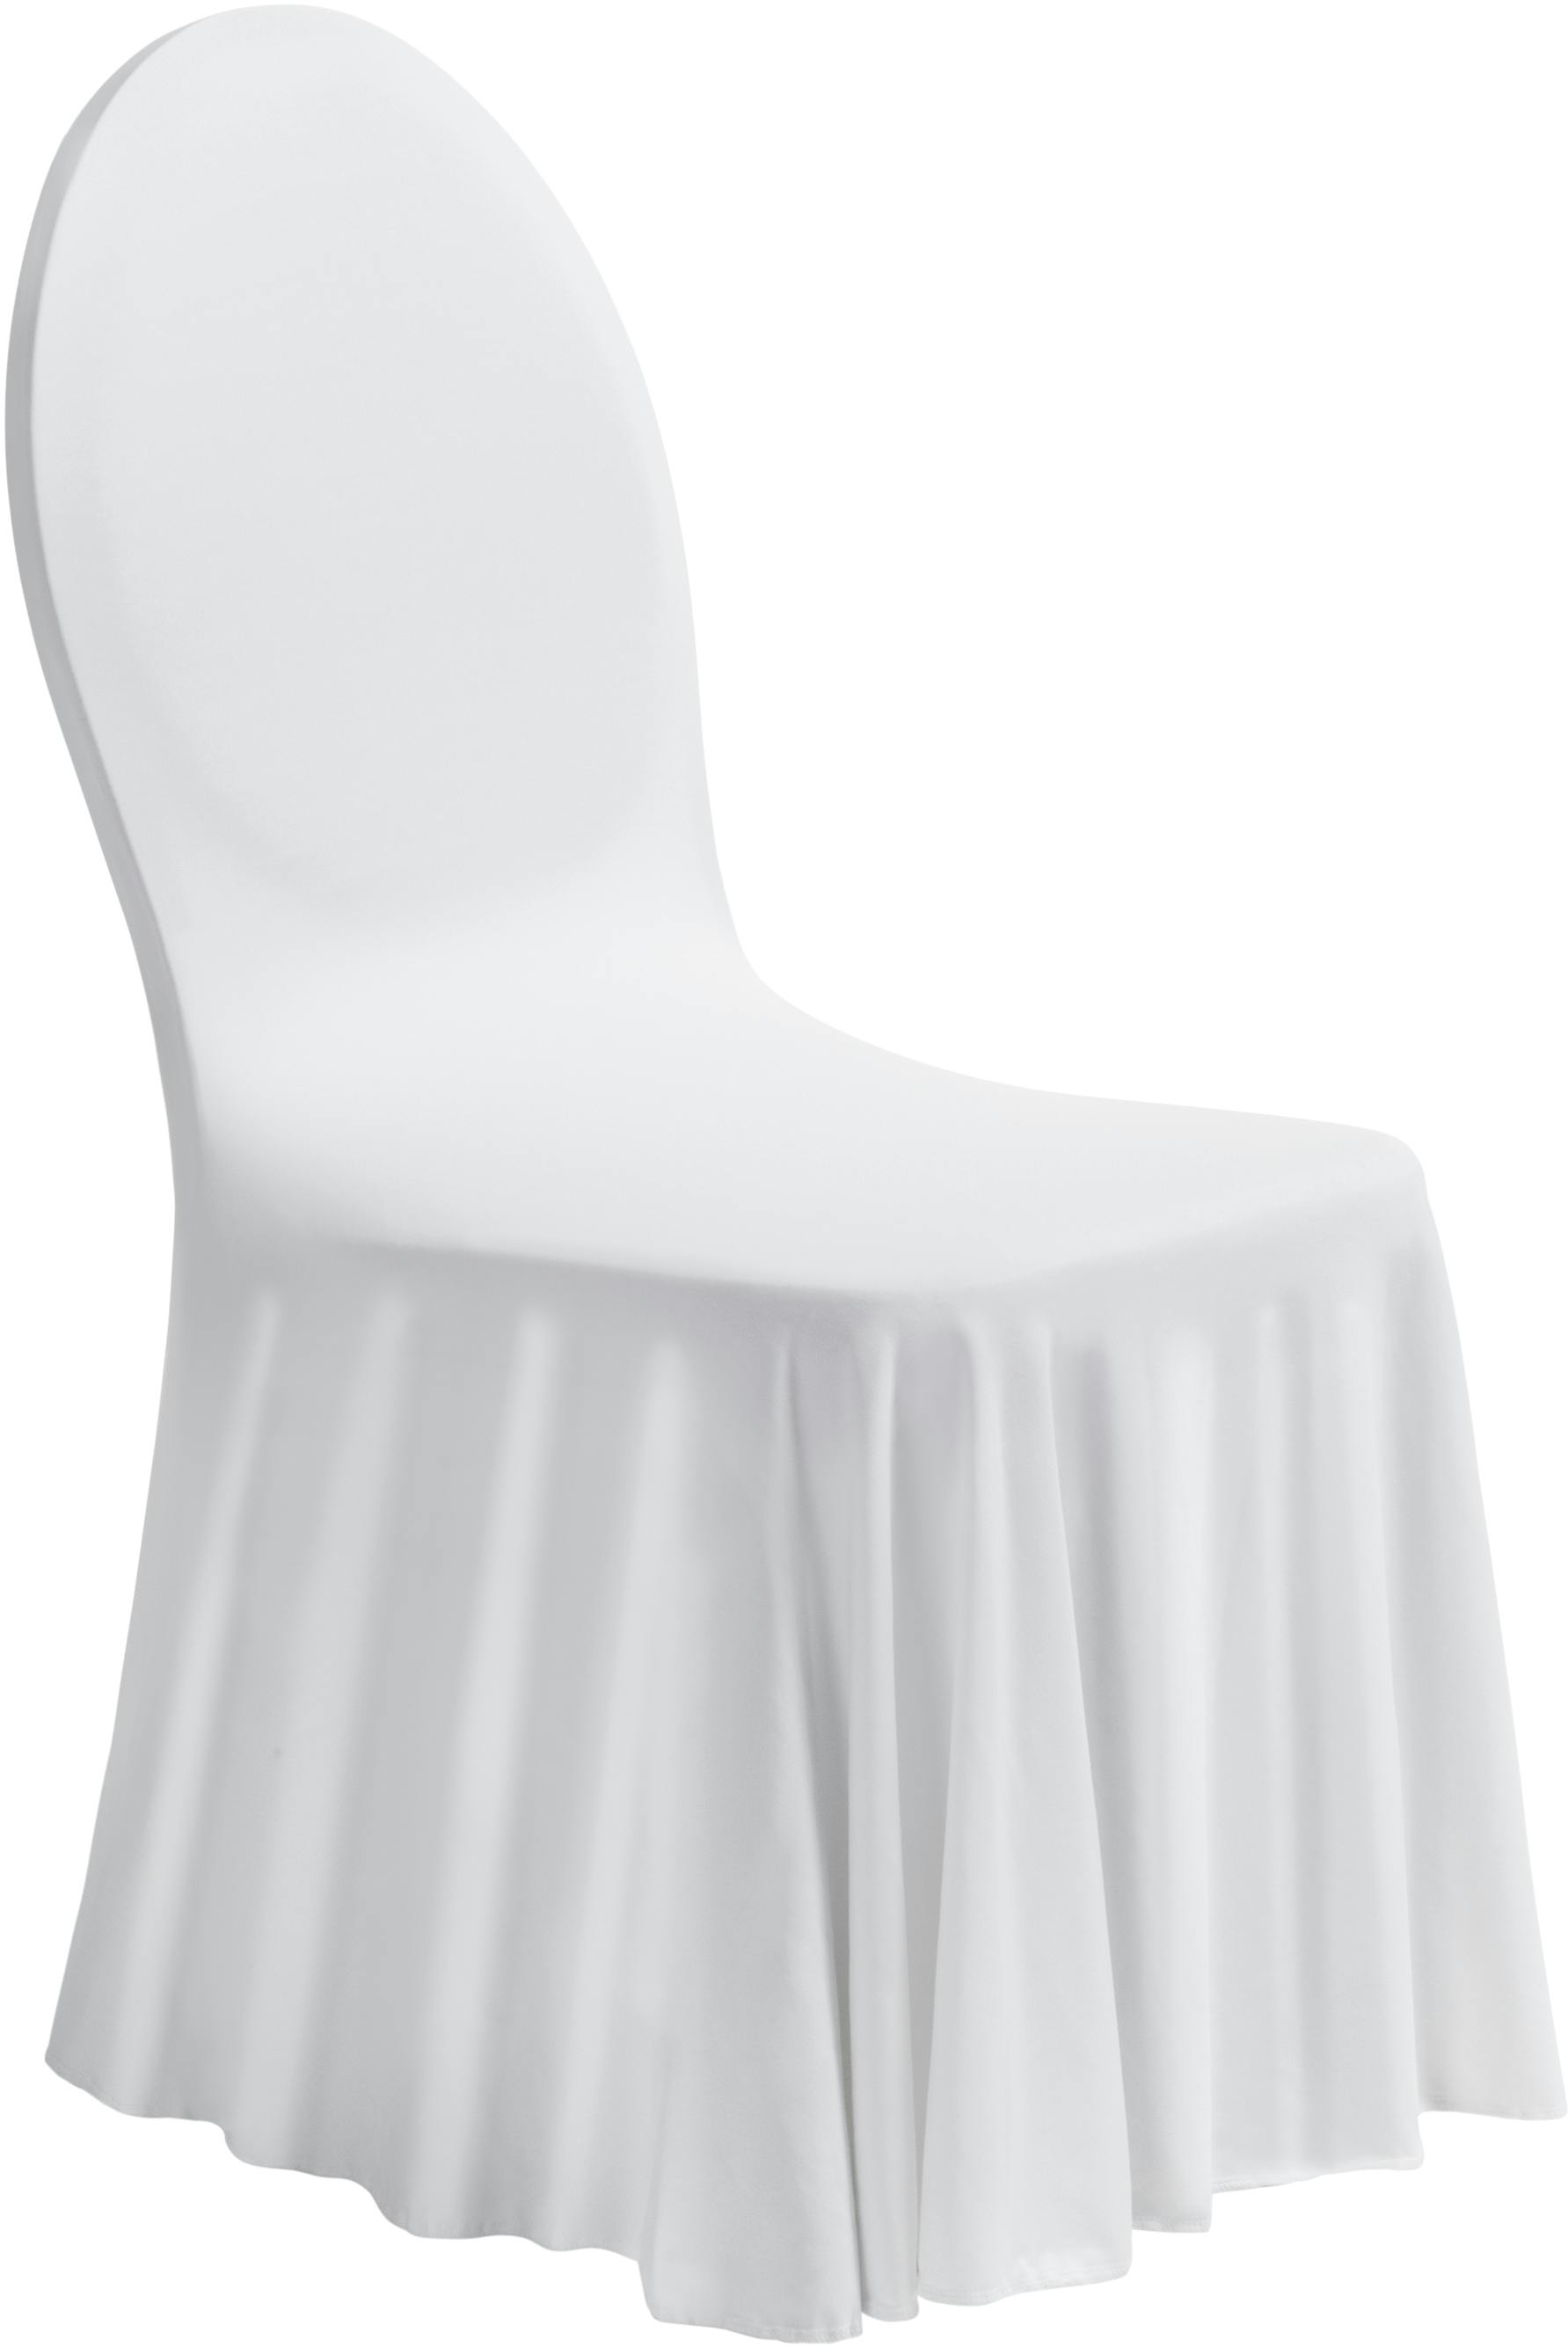 Stuhlhusse stuhlüberzug silla referencia stretchhusse cubierta elástico color elegibles 